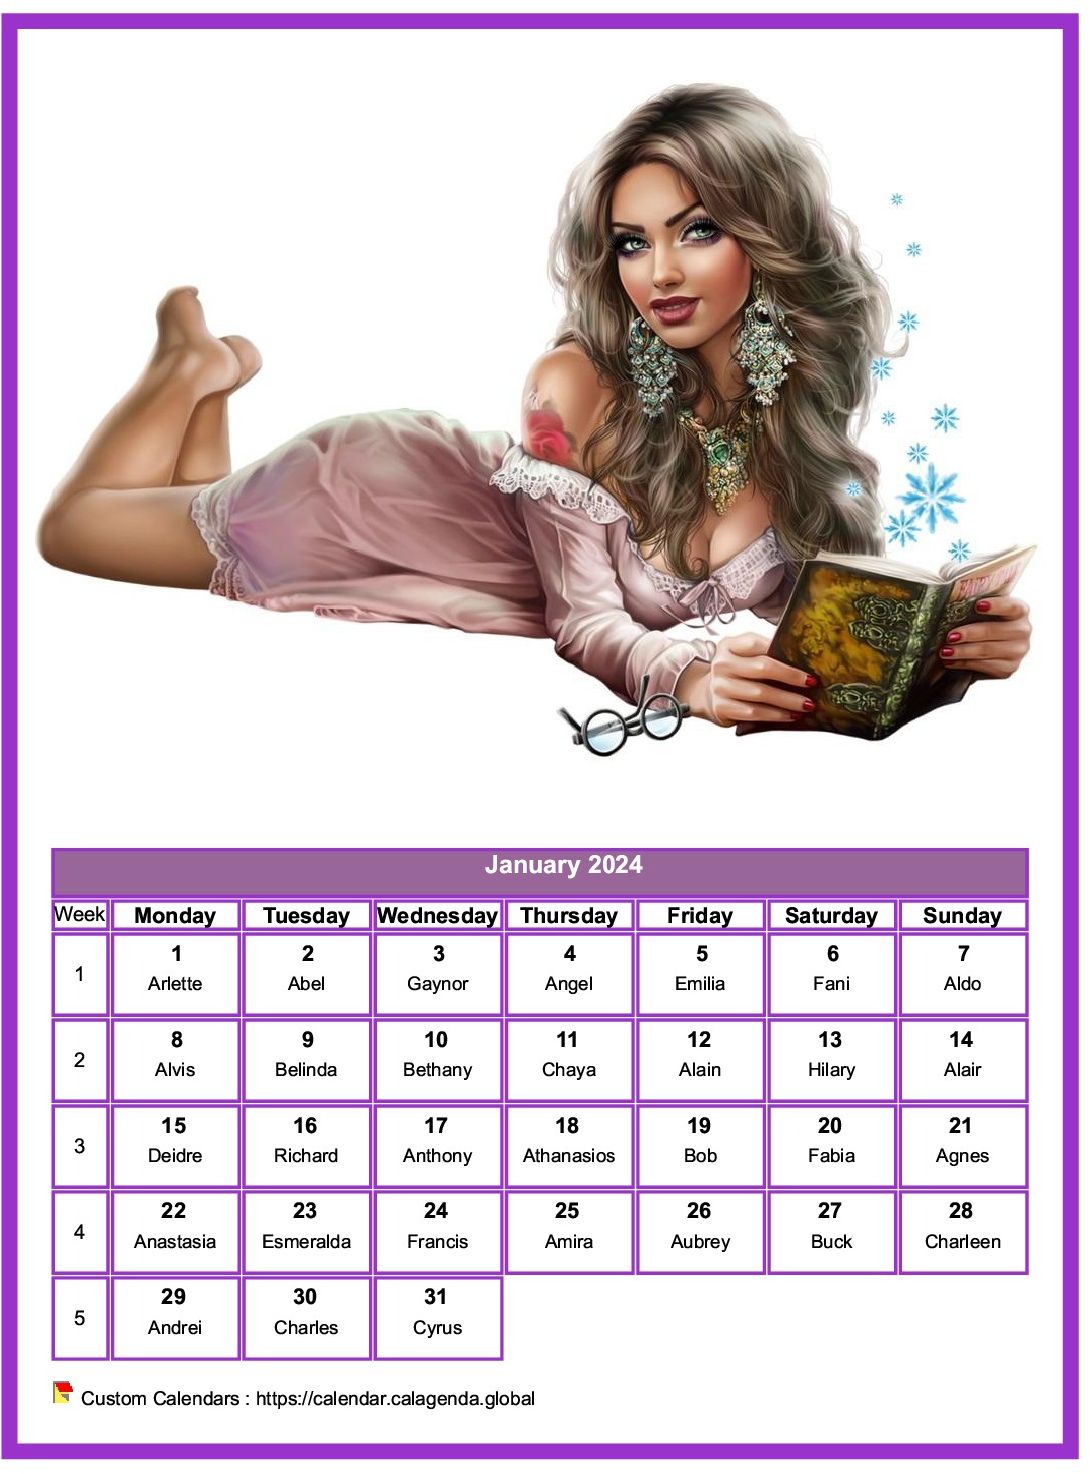 Calendar January 2024 women